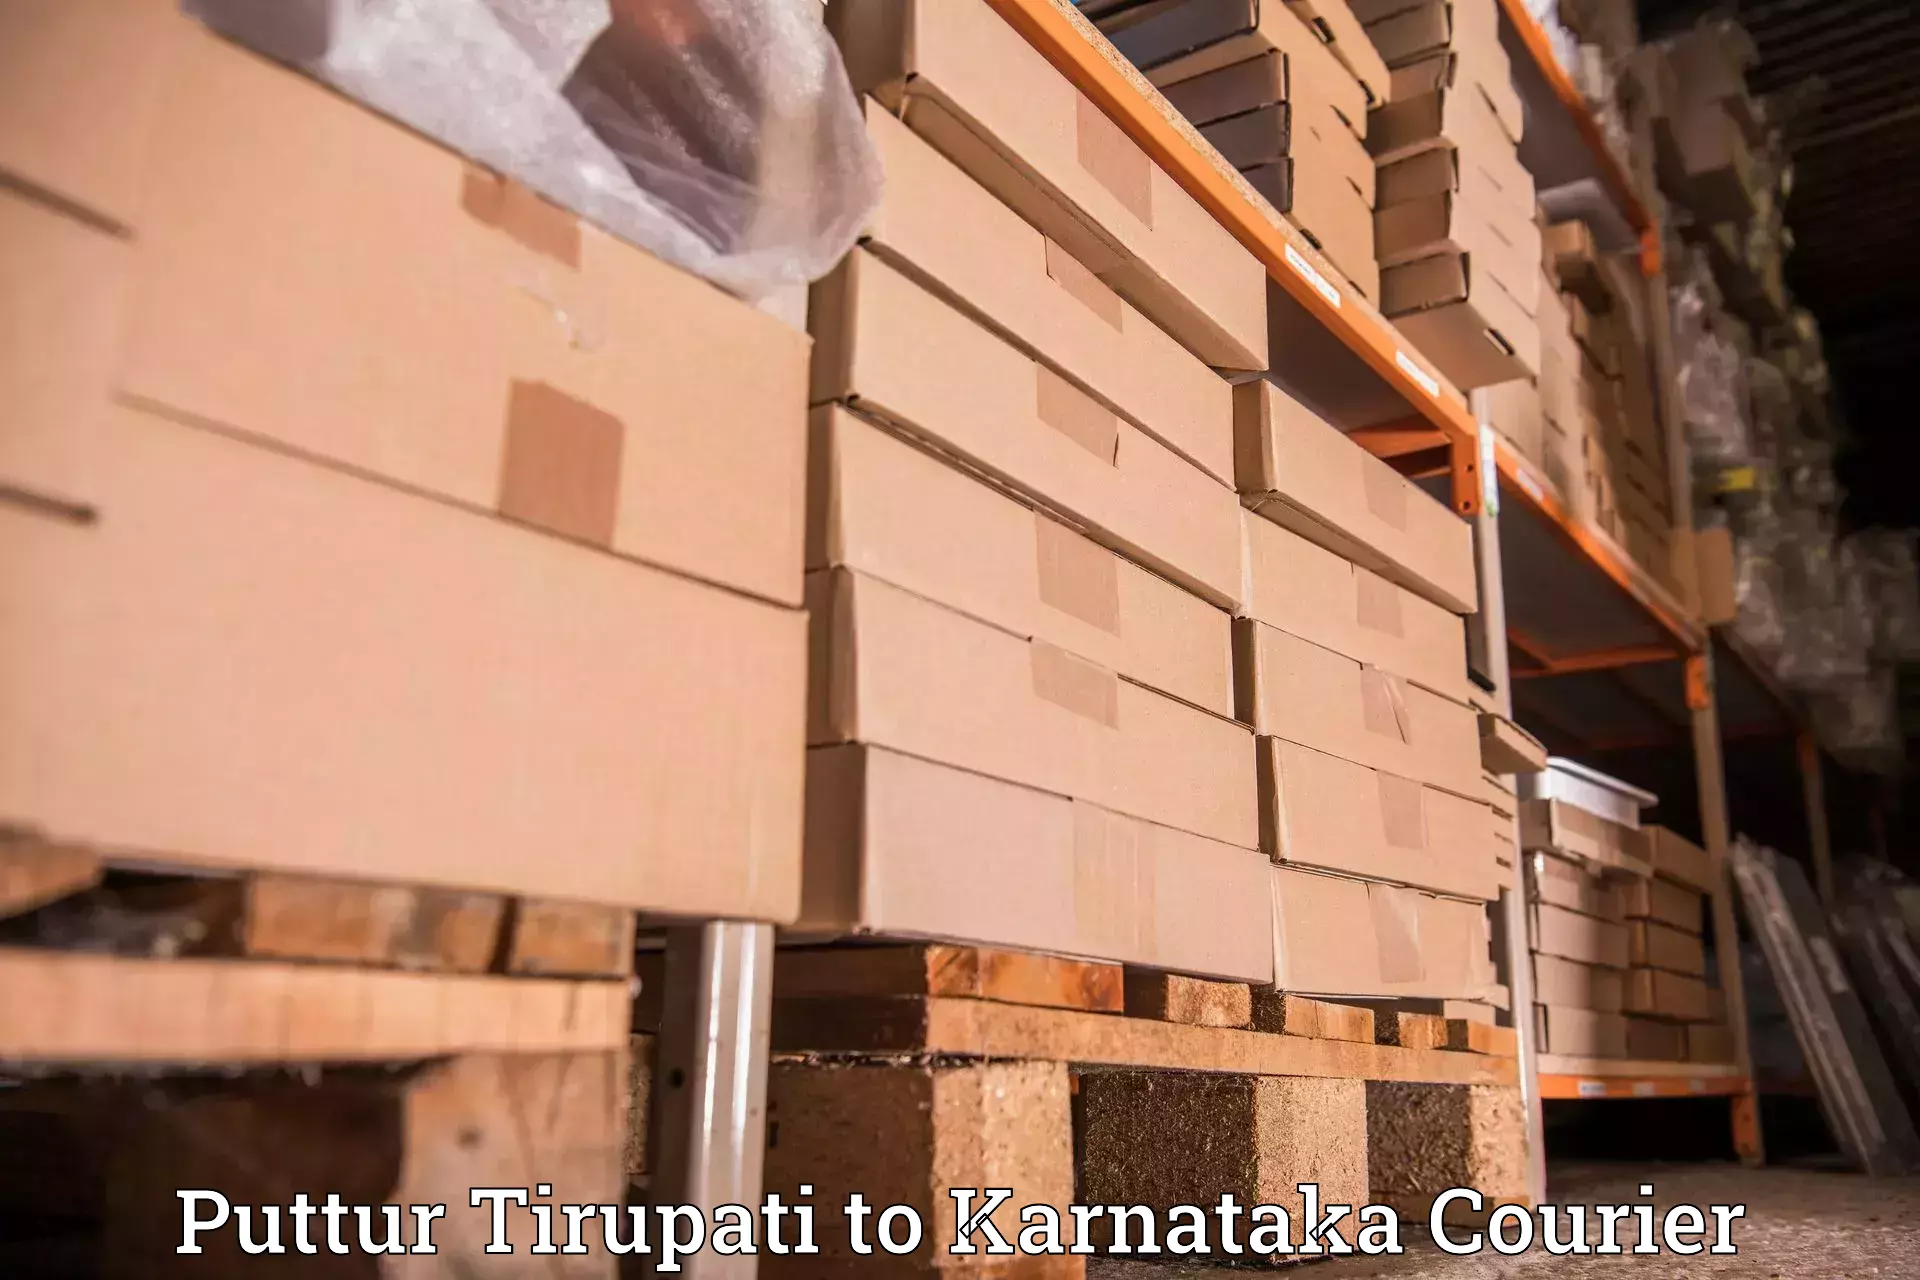 24-hour courier service Puttur Tirupati to Harpanahalli